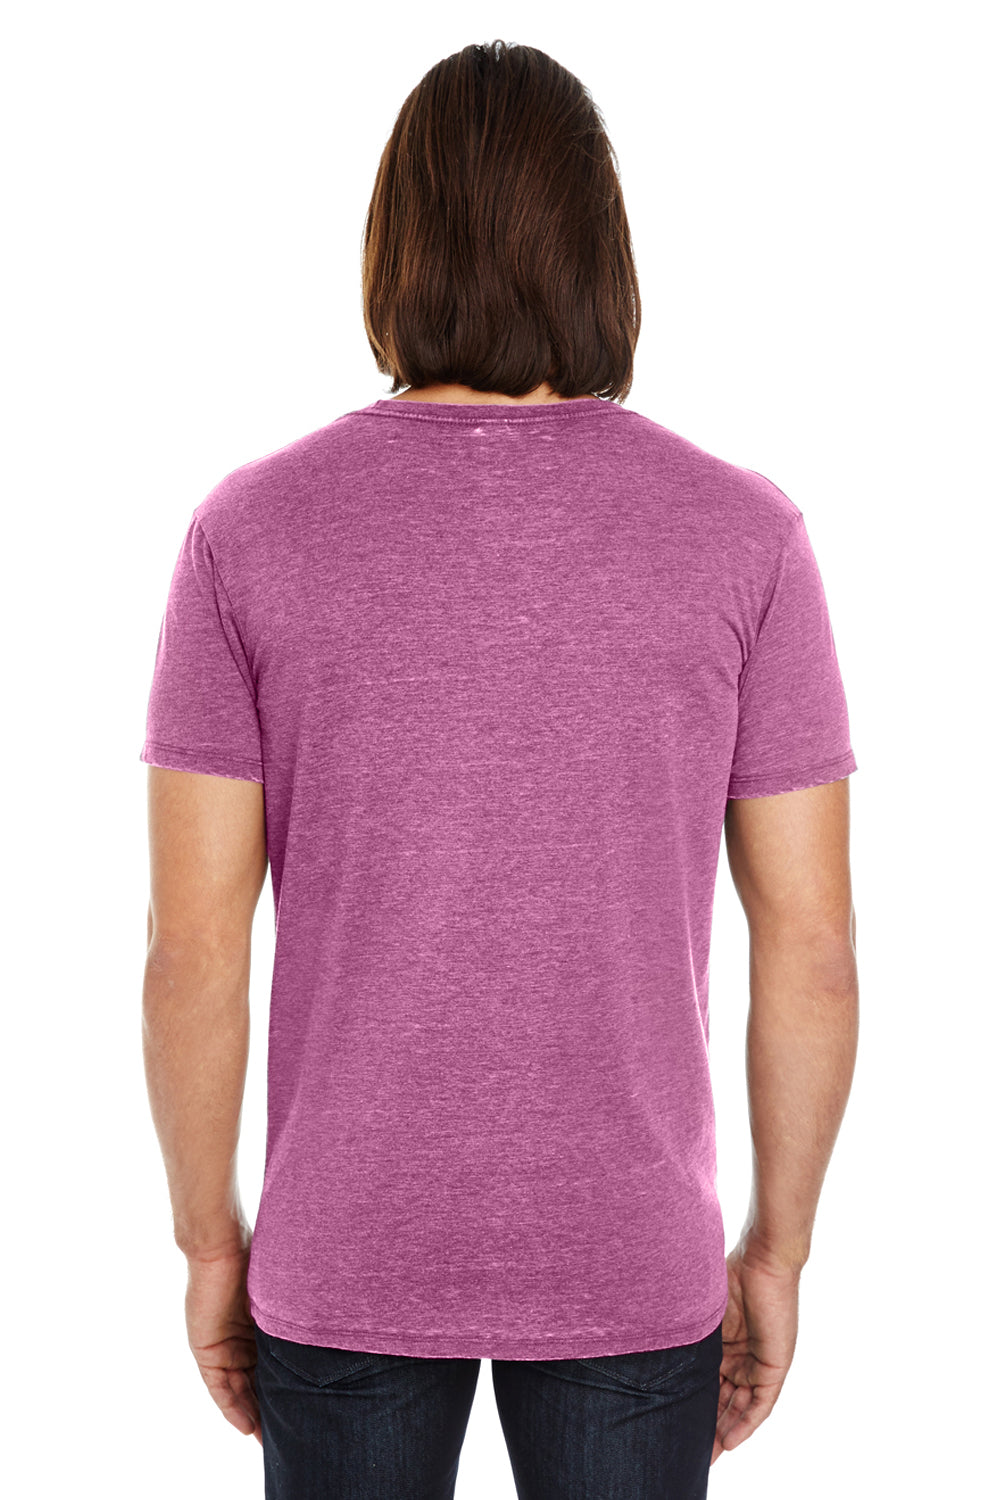 Threadfast Apparel 108A Mens Vintage Dye Short Sleeve Crewneck T-Shirt Wine Purple Back